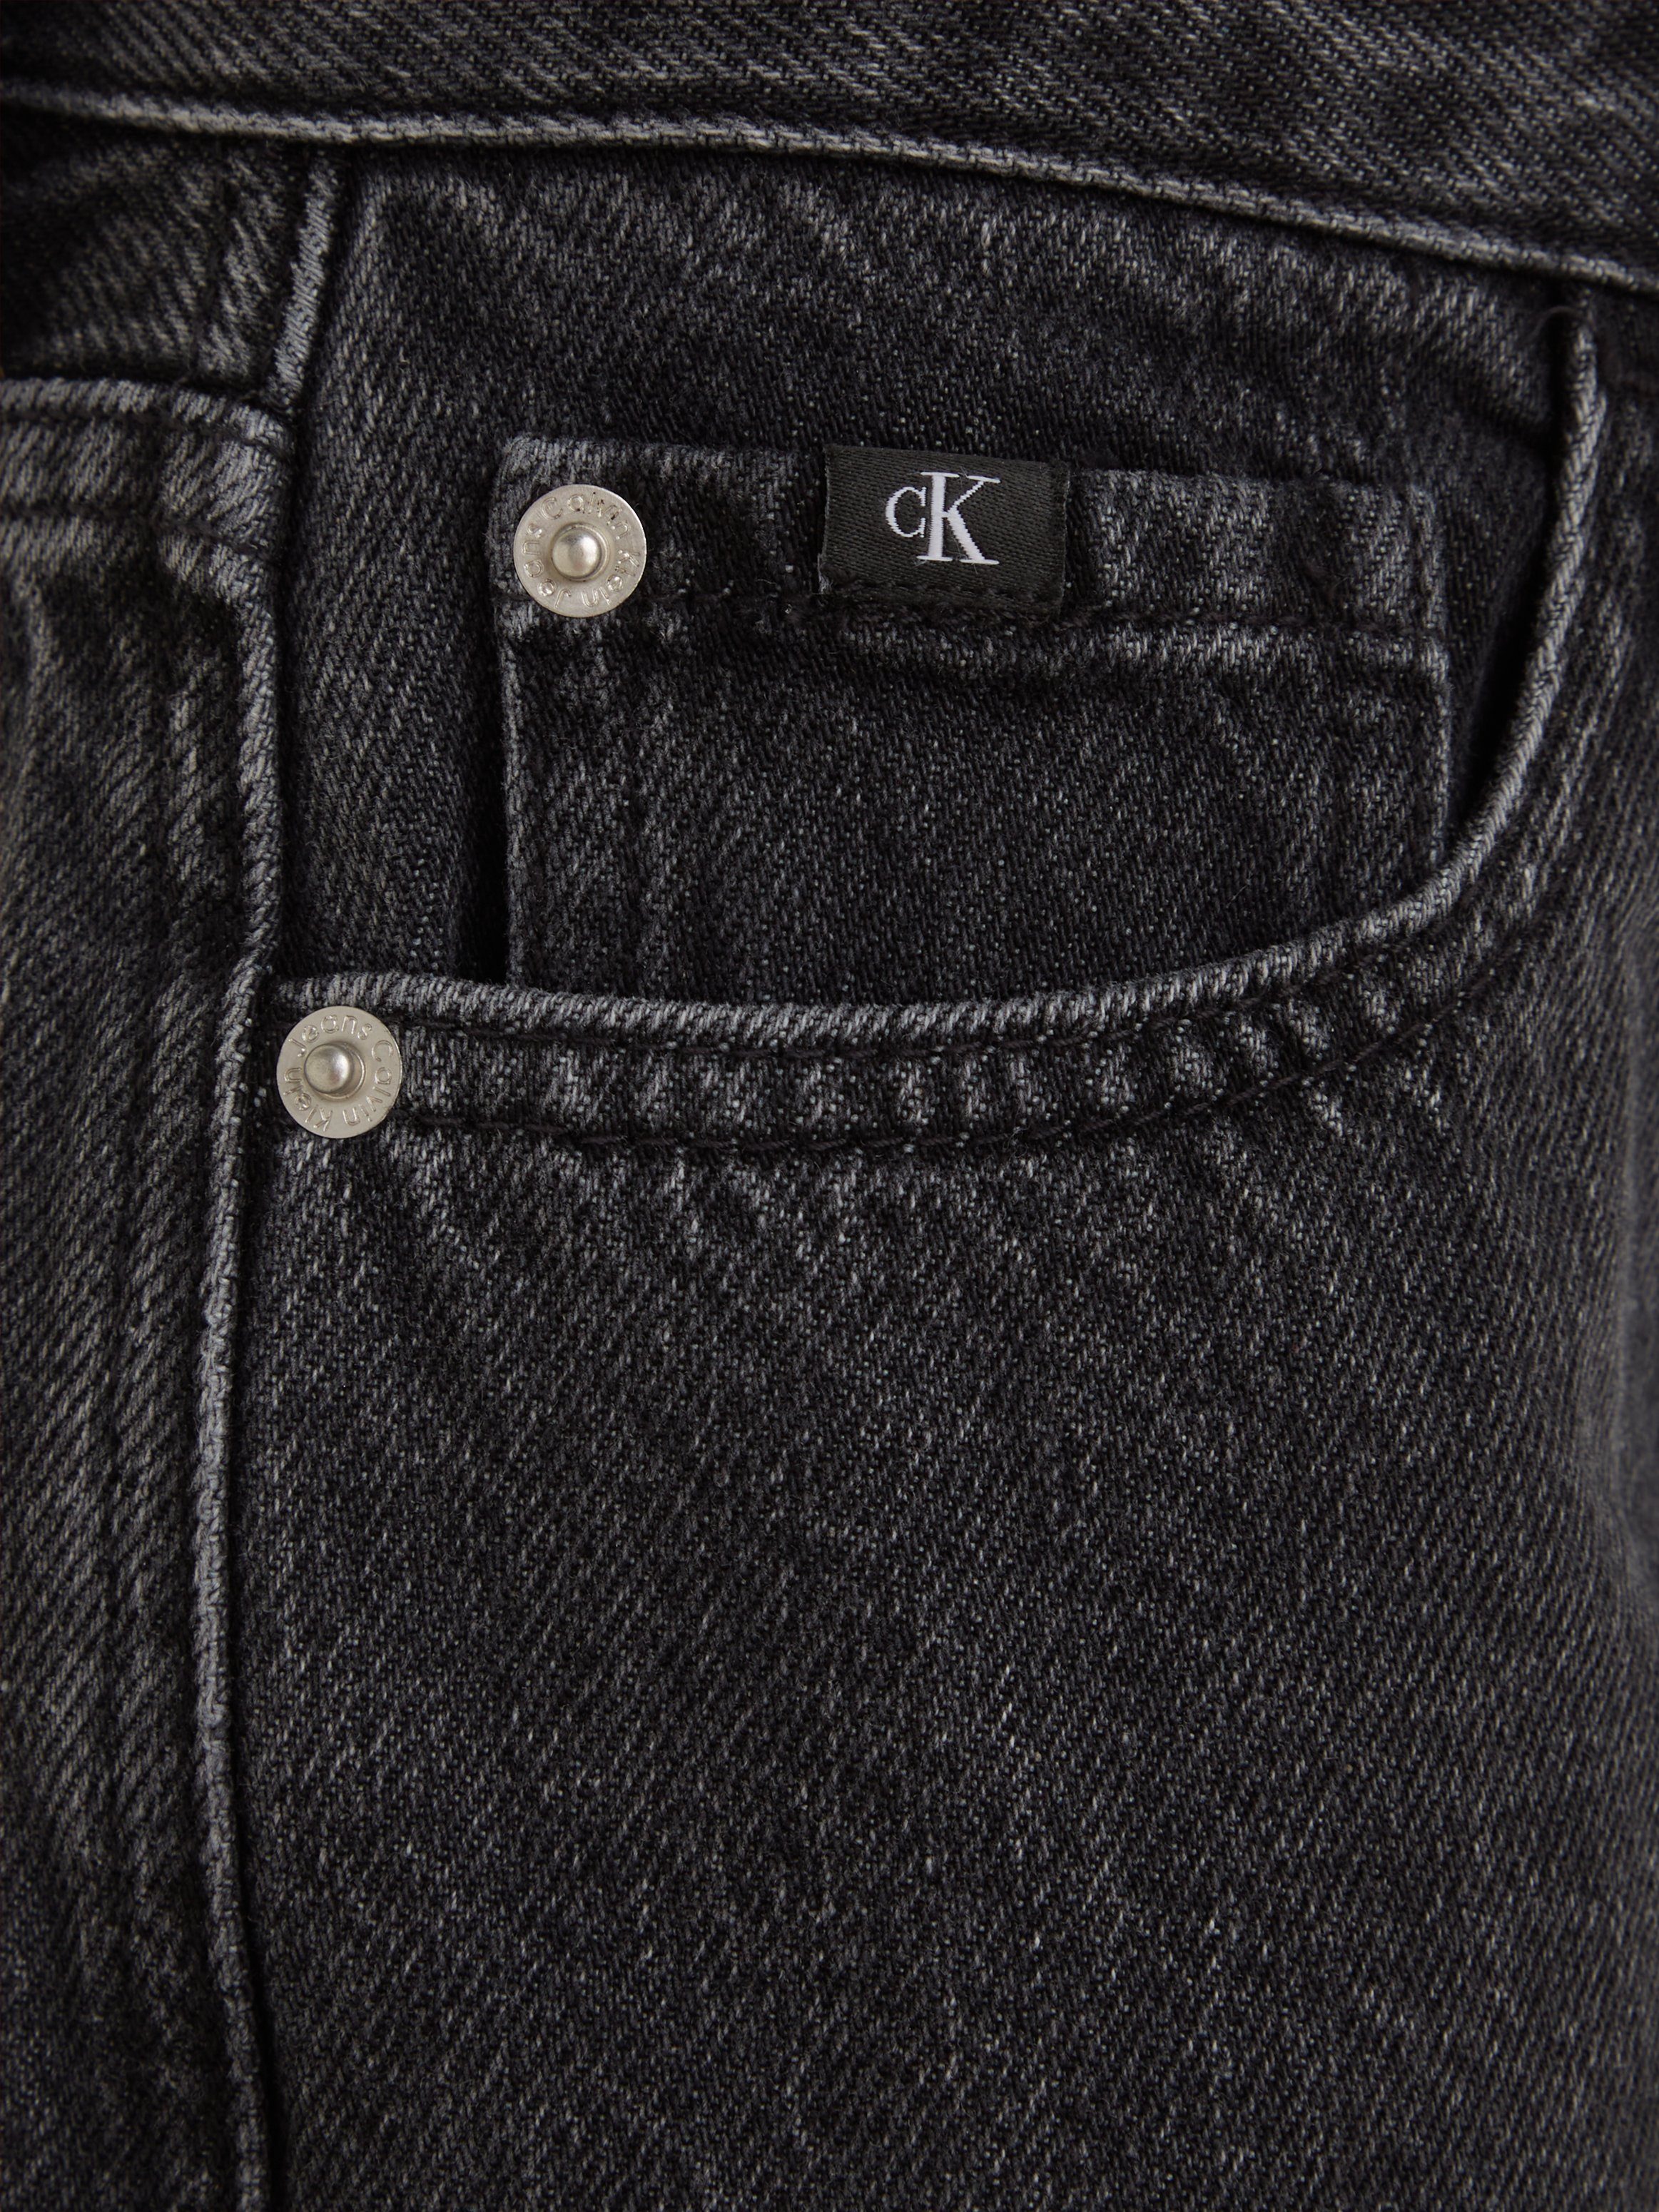 Calvin Klein RELAXED 5-Poket-Style DENIM Shorts Jeans SHORTS im